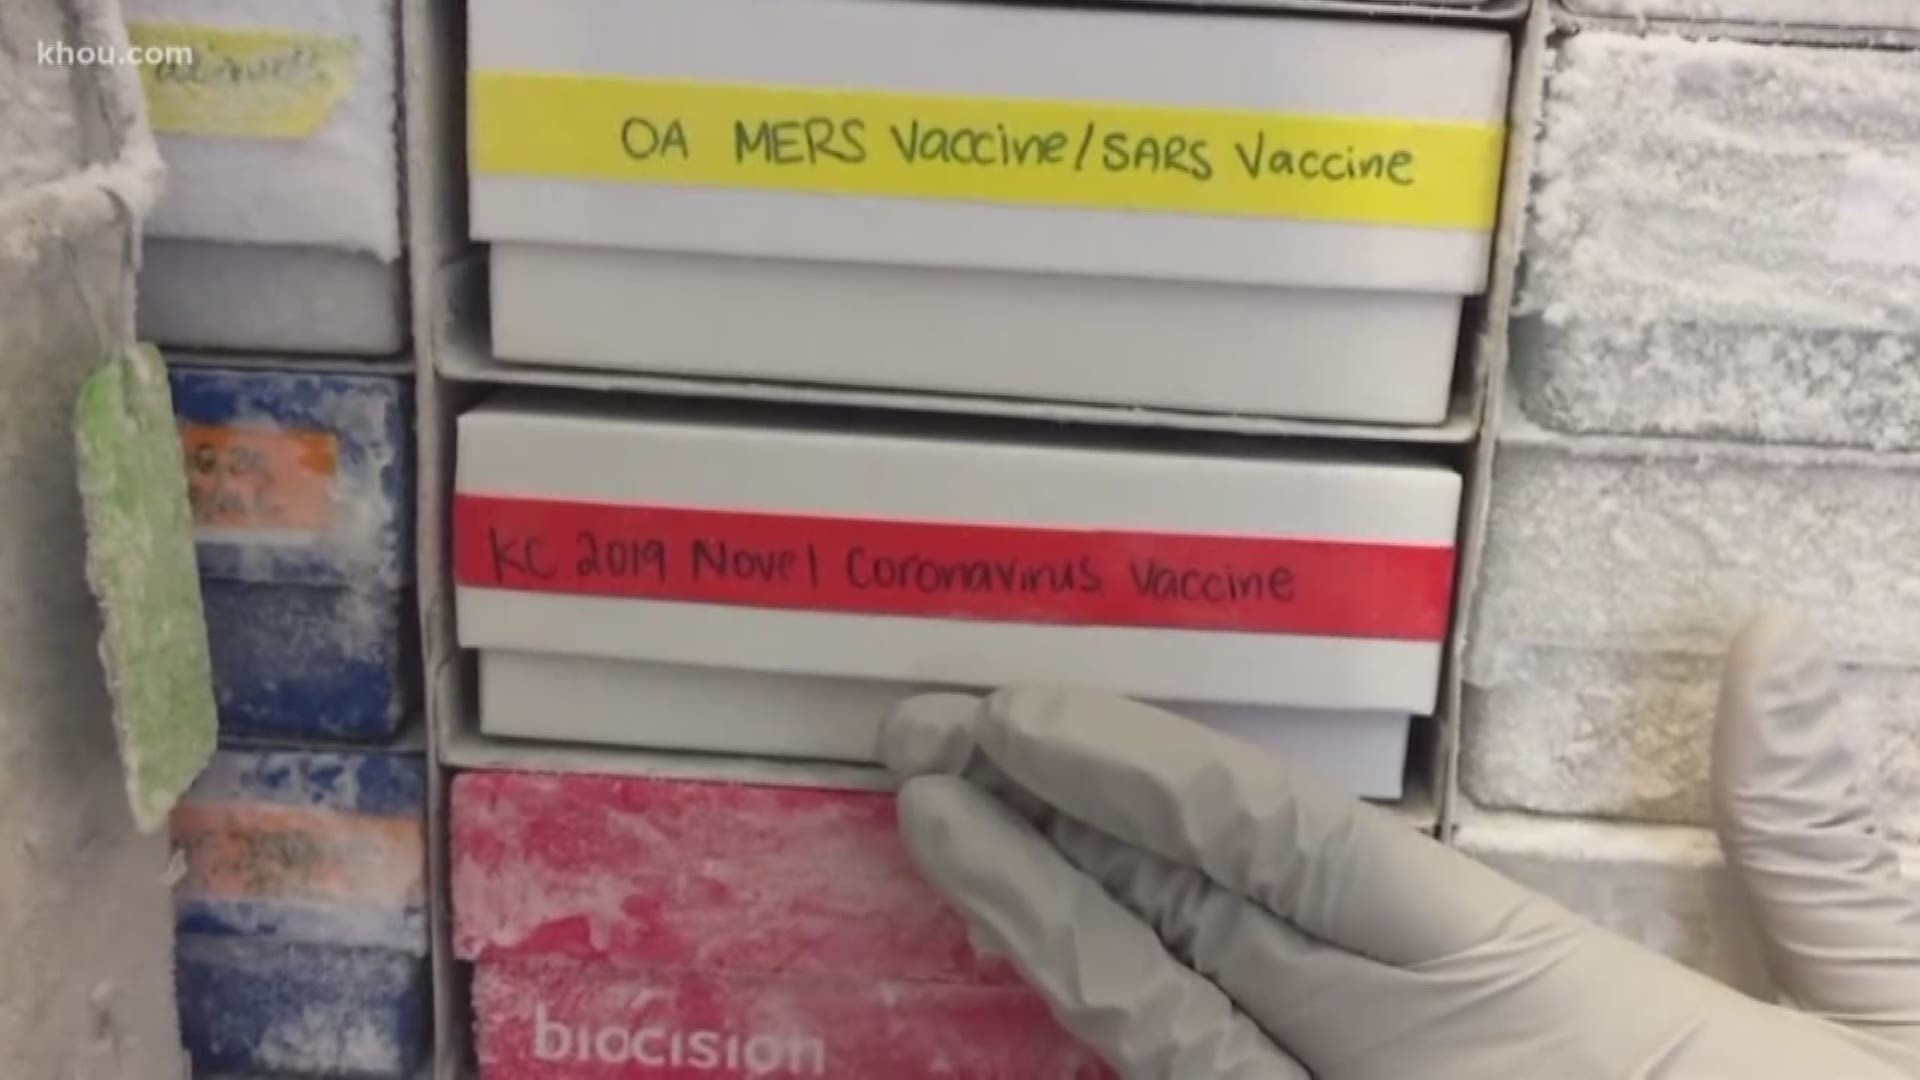 World-renown vaccine expert Dr. Peter Hotez warns against optimistic coronavirus vaccine timelines.